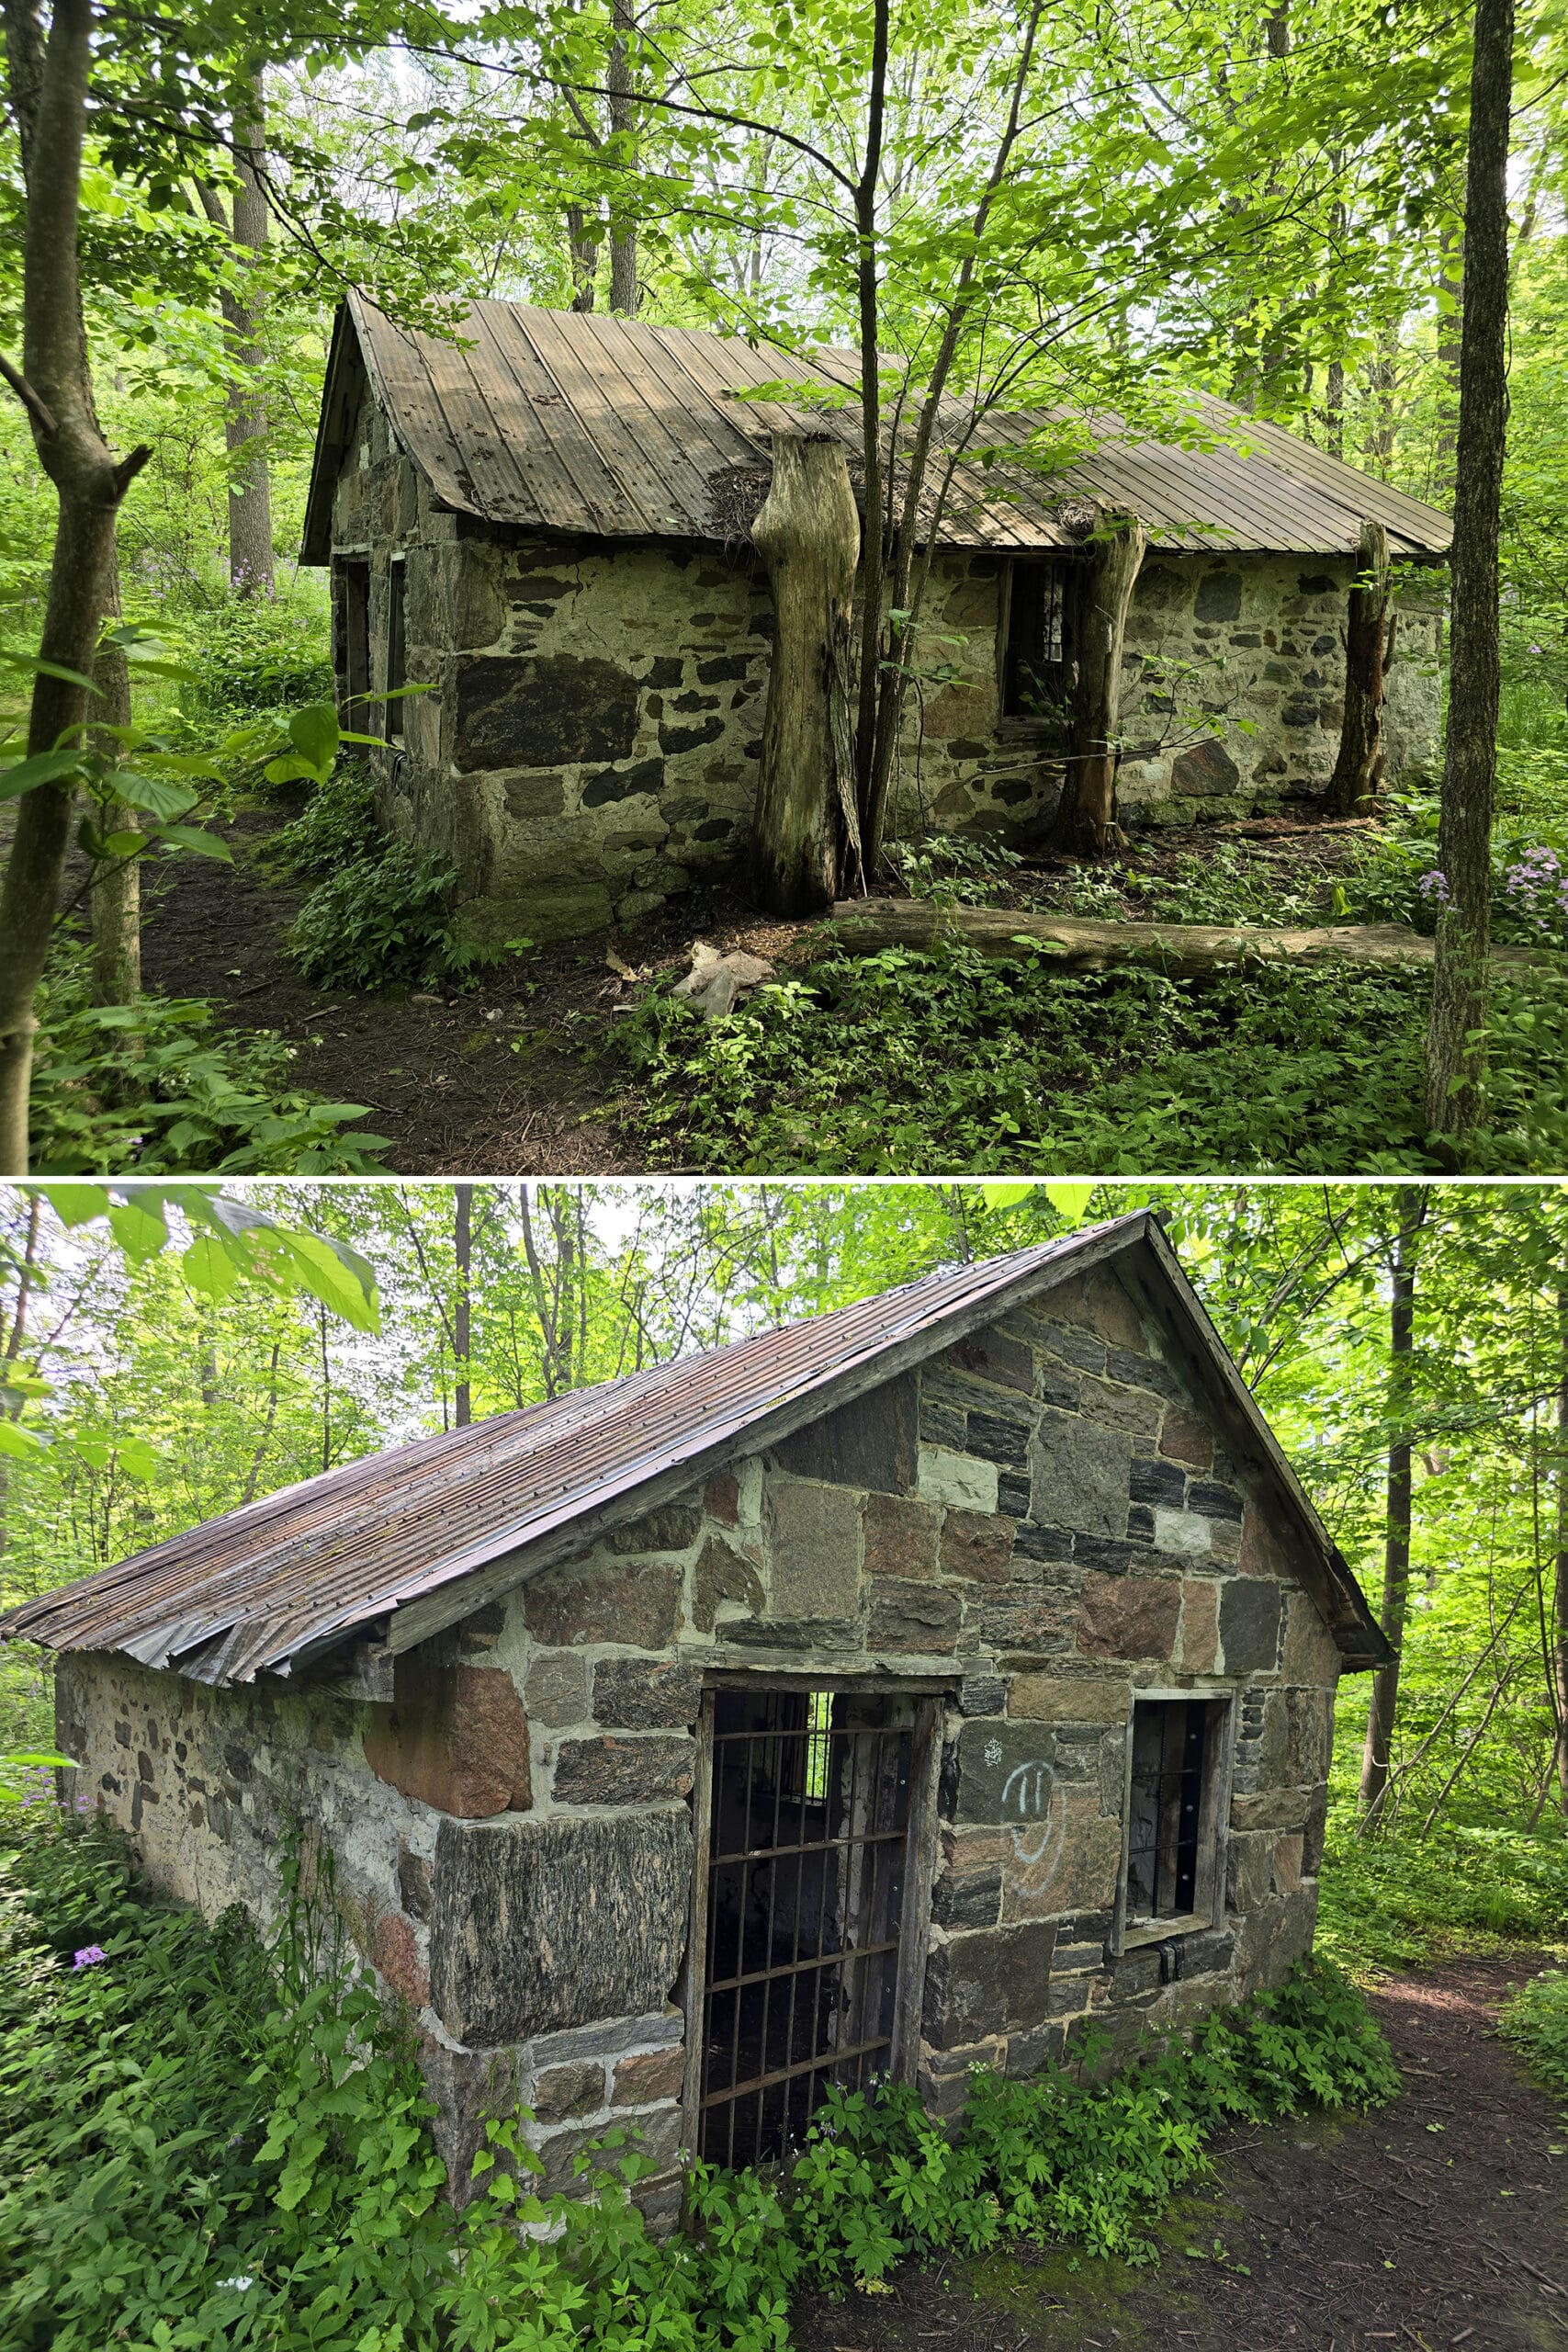 2 part image showing bass lake provincial park's stone milk house.